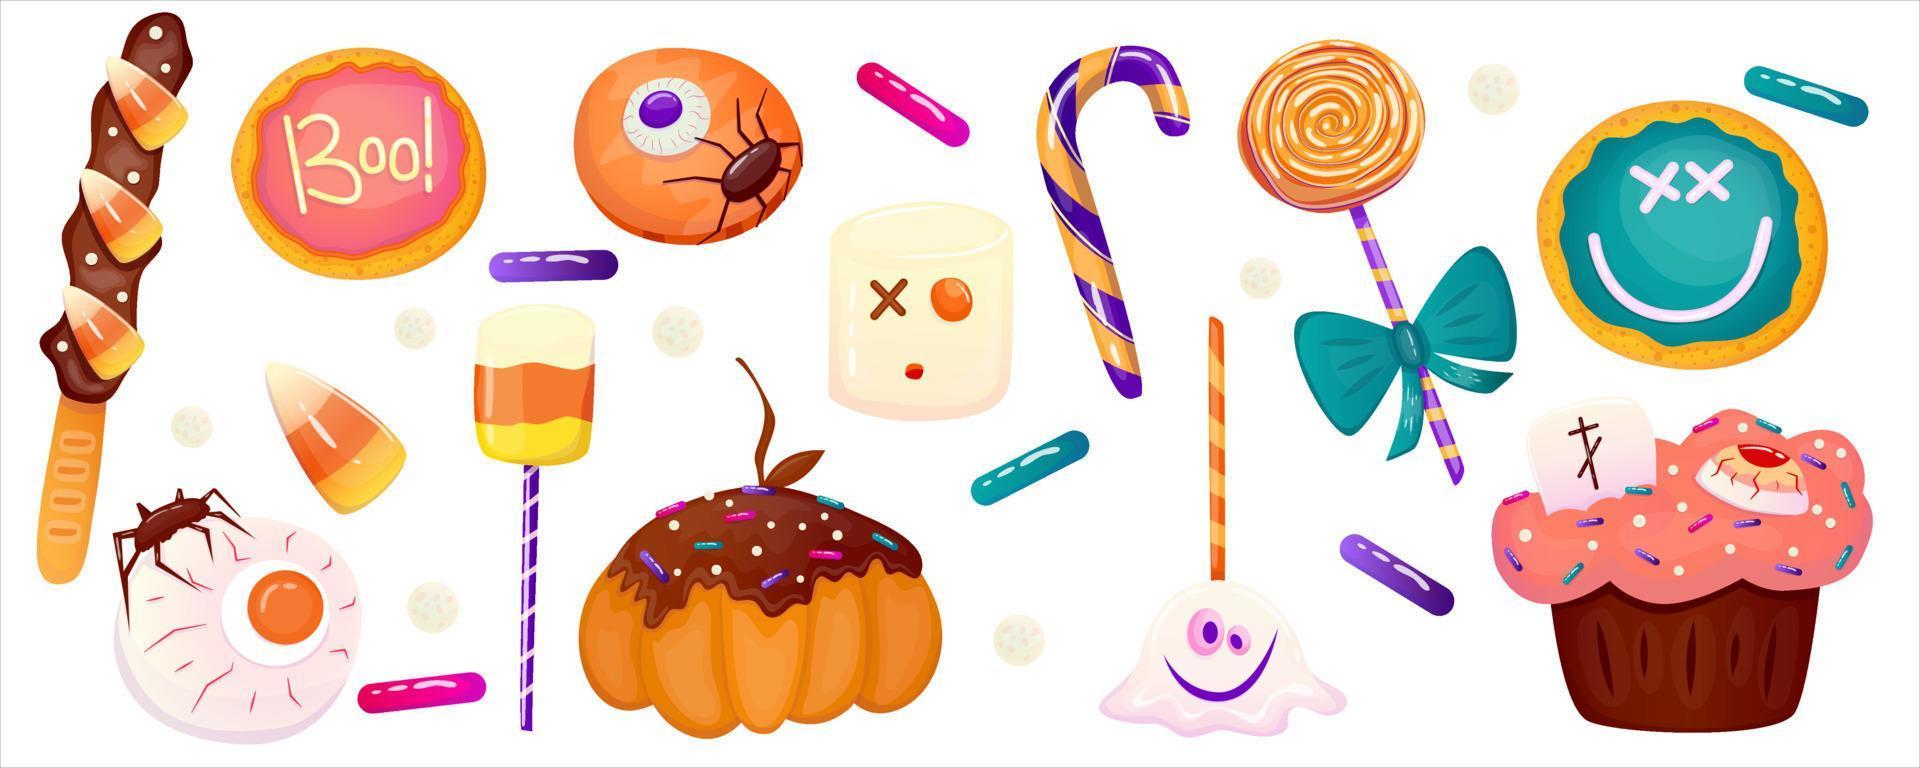 Halloween sweet dessert set clipart on a white background. Halloween eyeball, marshmallow, pumpkin and candy corn. Cartoon vector illustration. Creepy dessert for the autumn holiday for design.